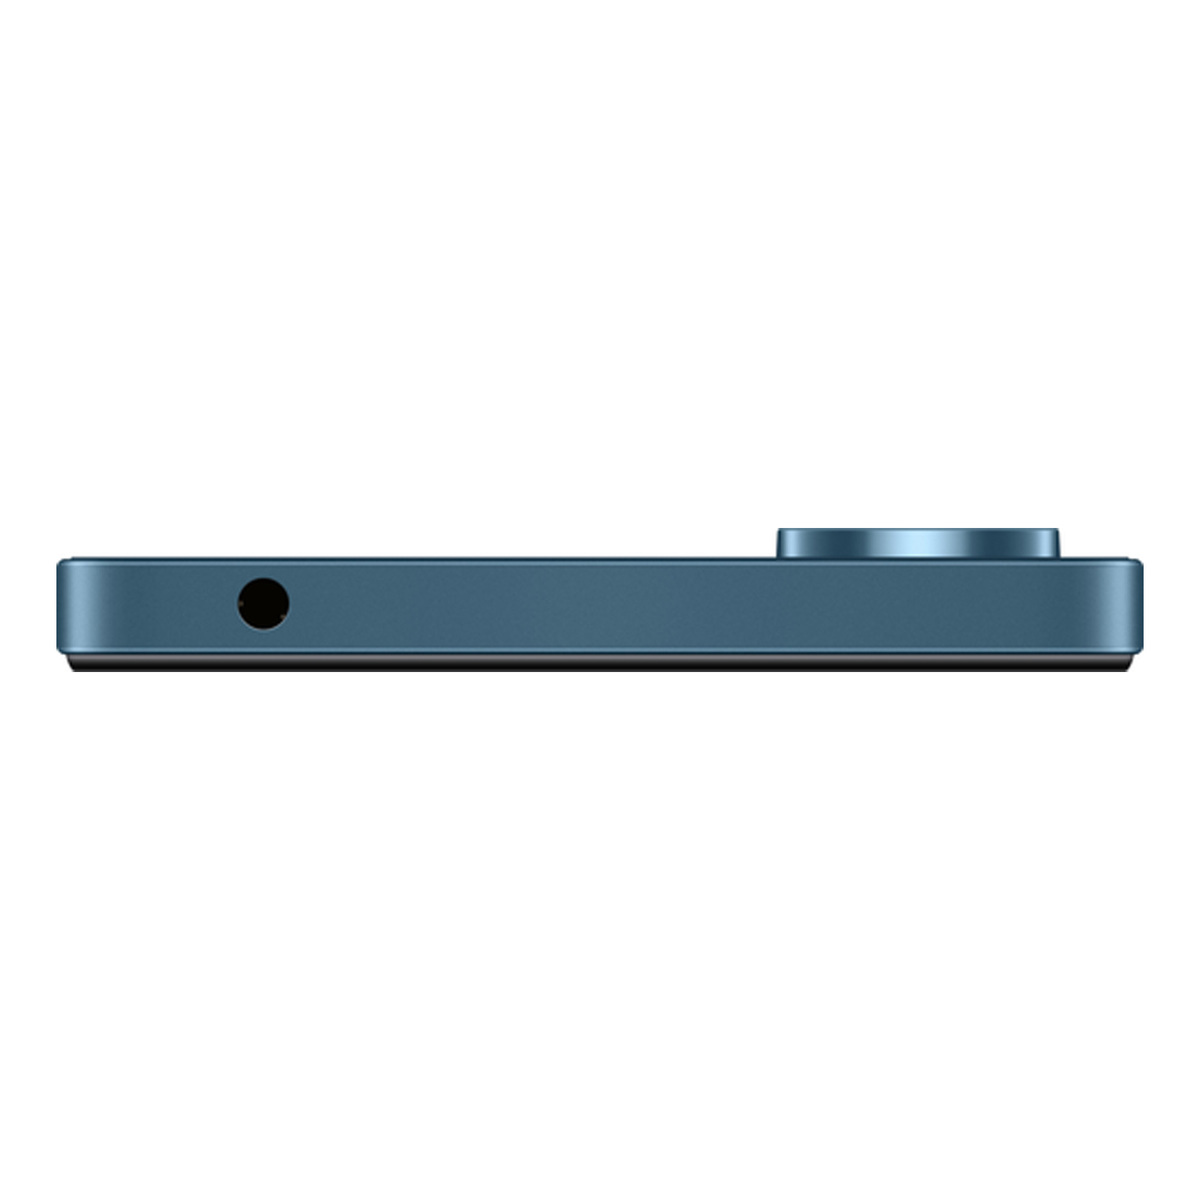 شاومي 13C هاتف ذكي ثنائي الشريحة، 4G، ذاكرة وصول عشوائي 6 جيجابايت، تخزين 128 جيجابايت، أزرق داكن